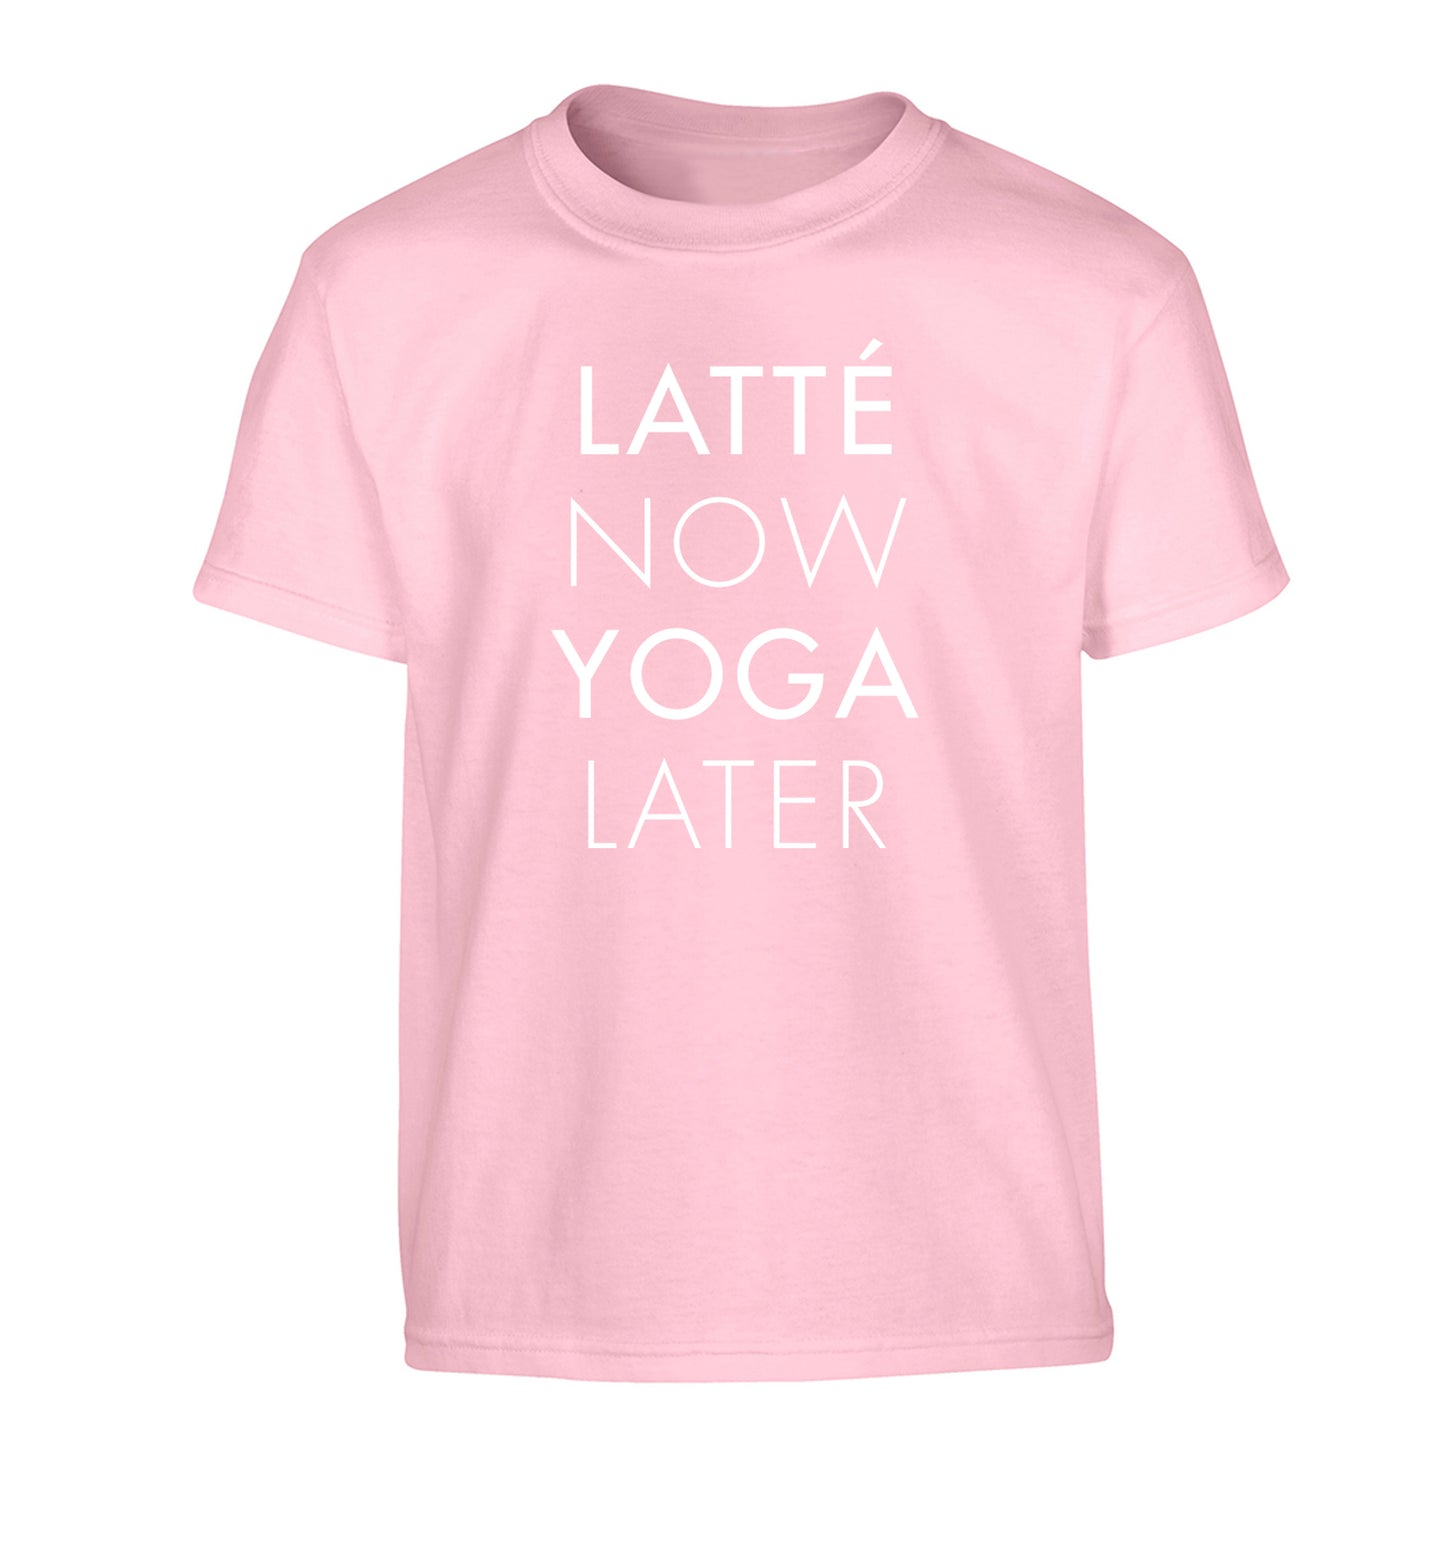 Latte now yoga later Children's light pink Tshirt 12-14 Years